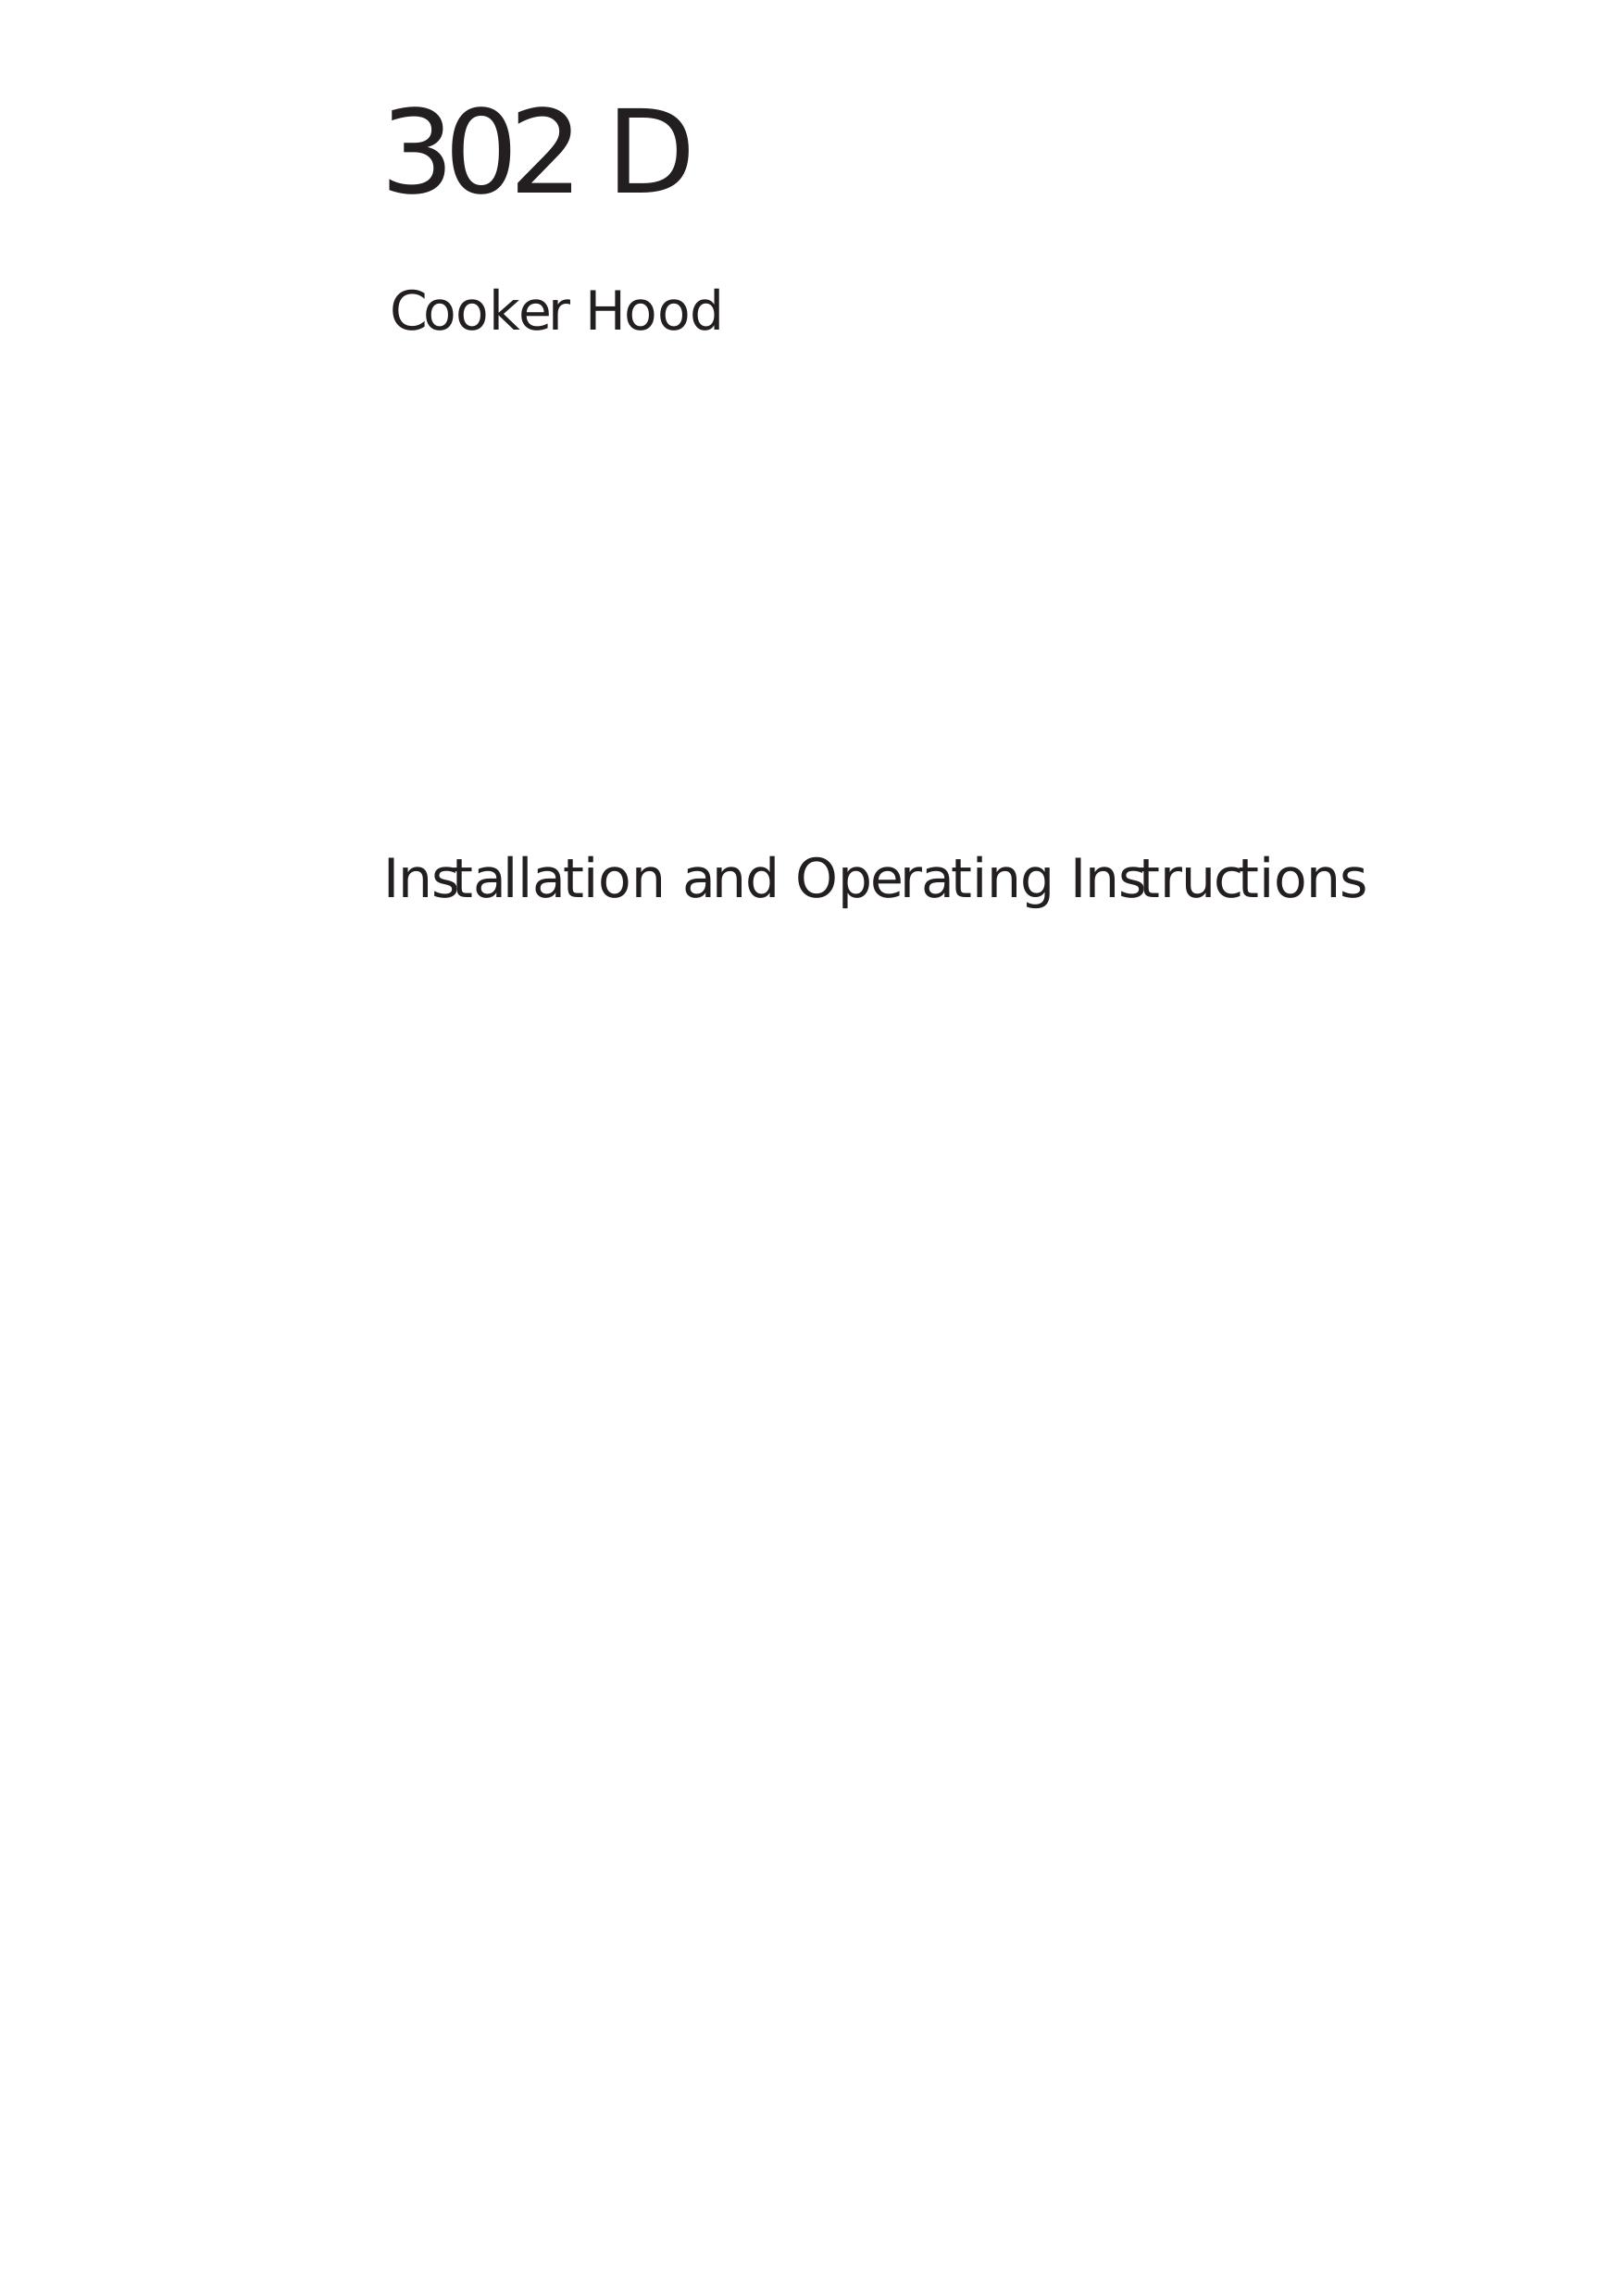 AEG 302D Ventilation Hood User Manual